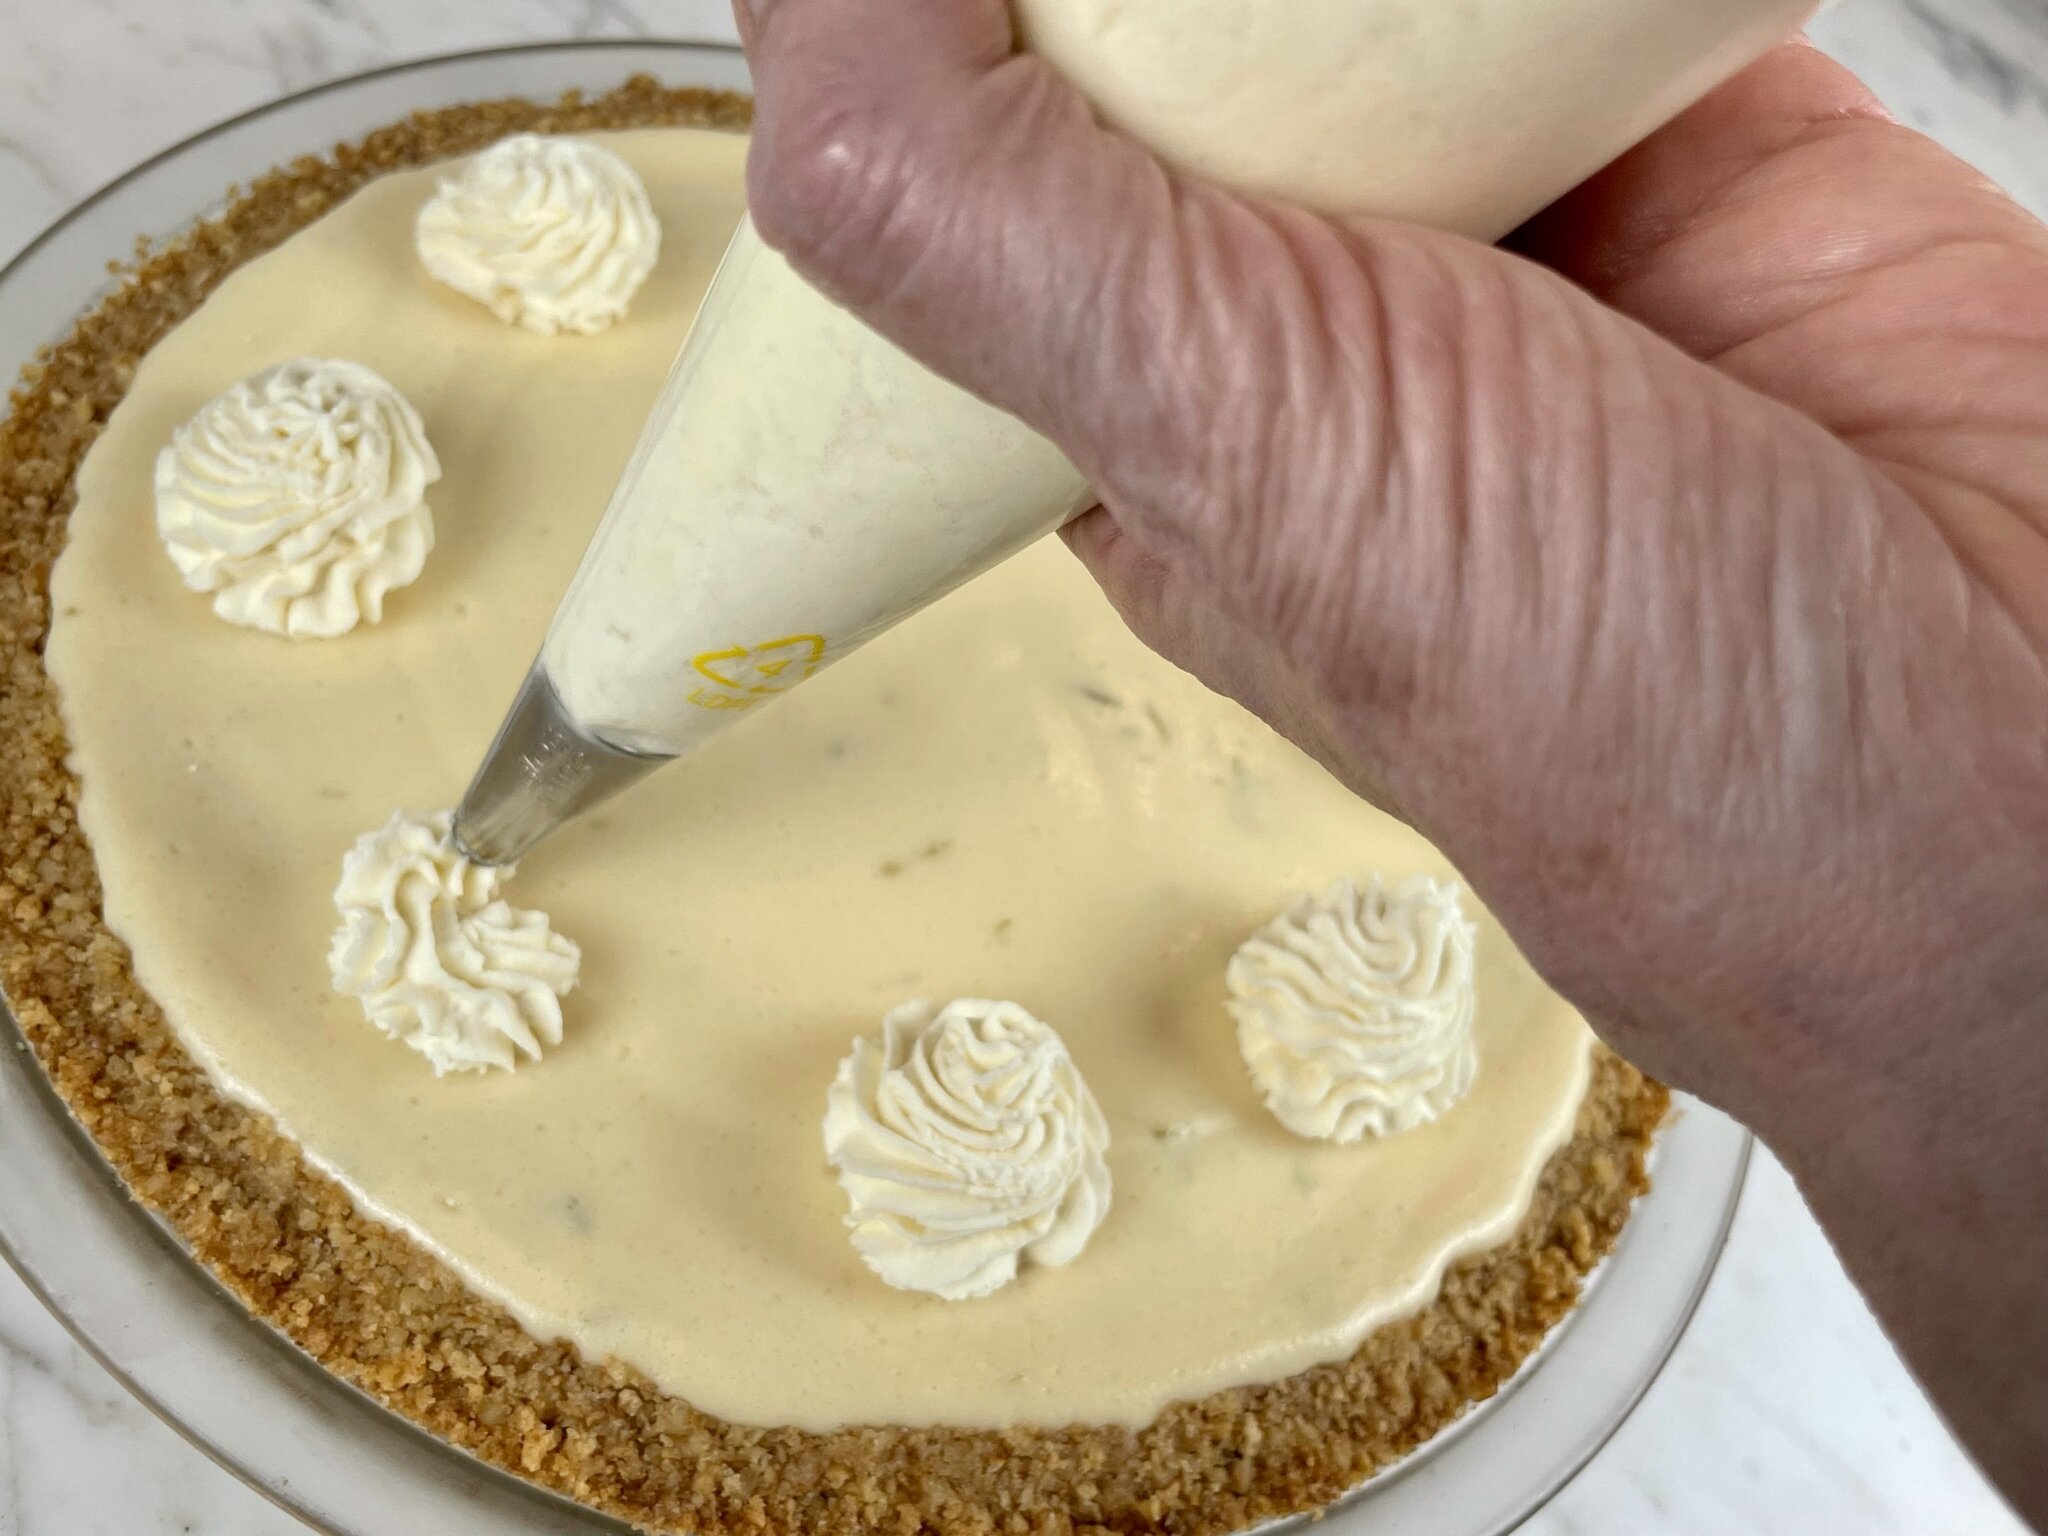 Pipe cream onto pie.